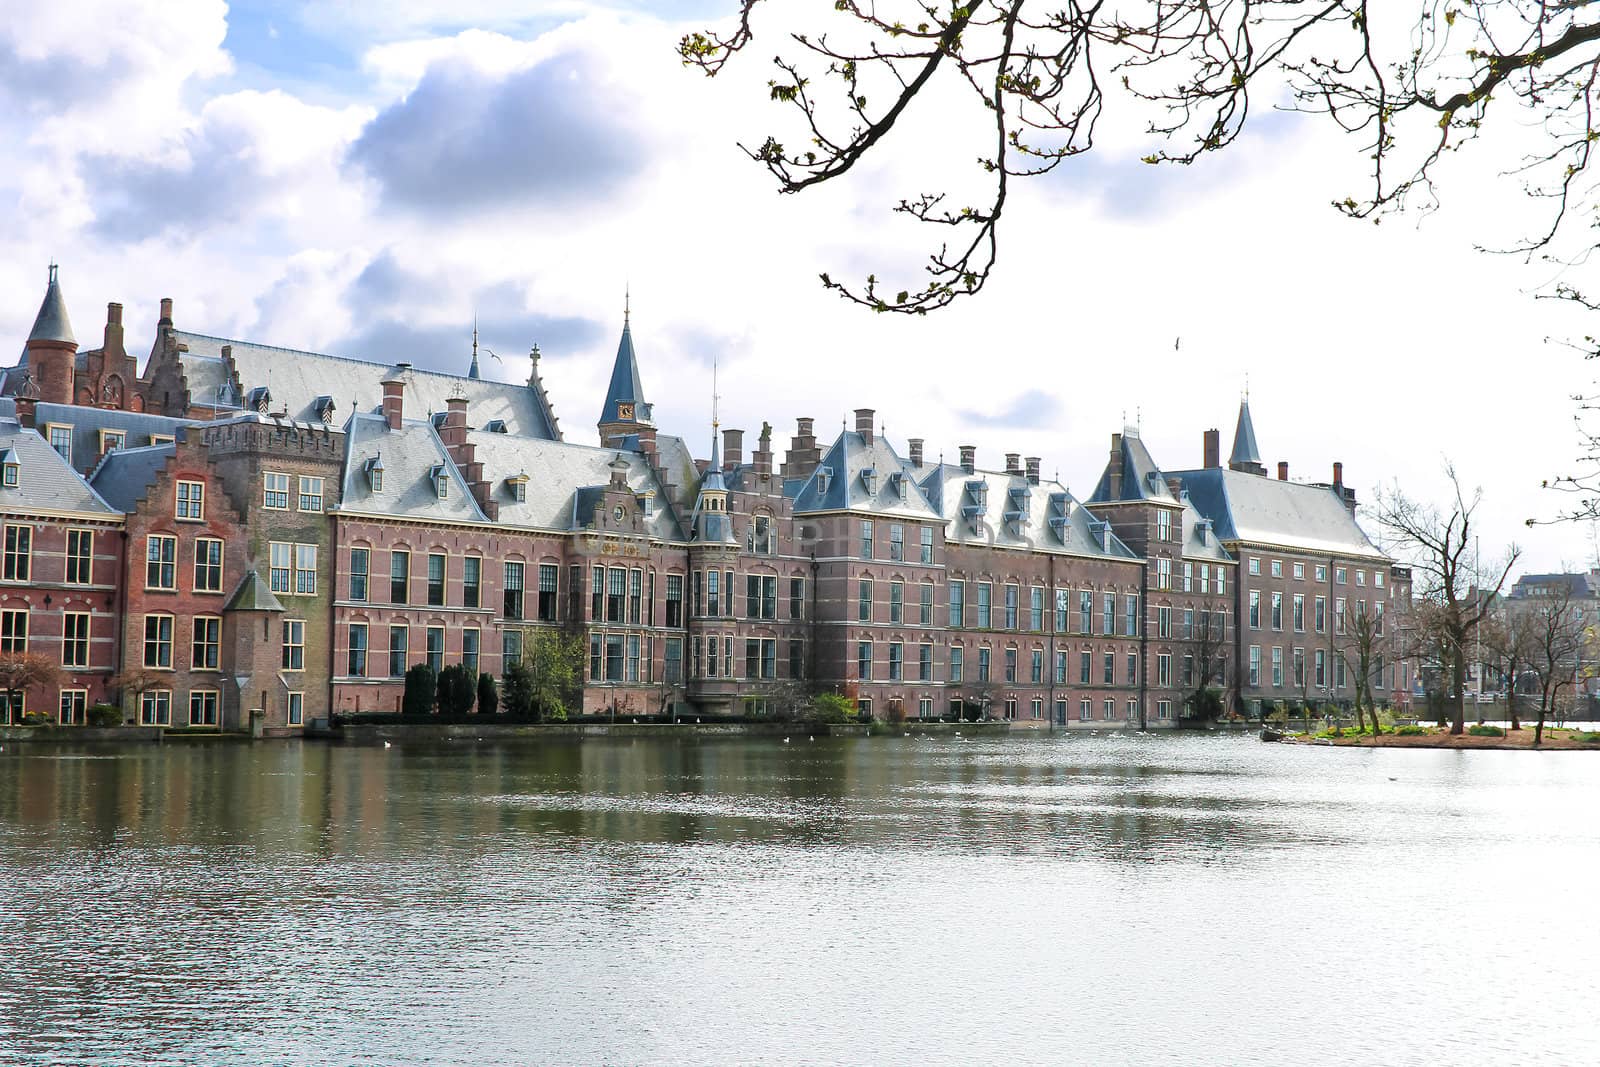 Binnenhof Palace in Den Haag,  Netherlands. Dutch Parlament buildings